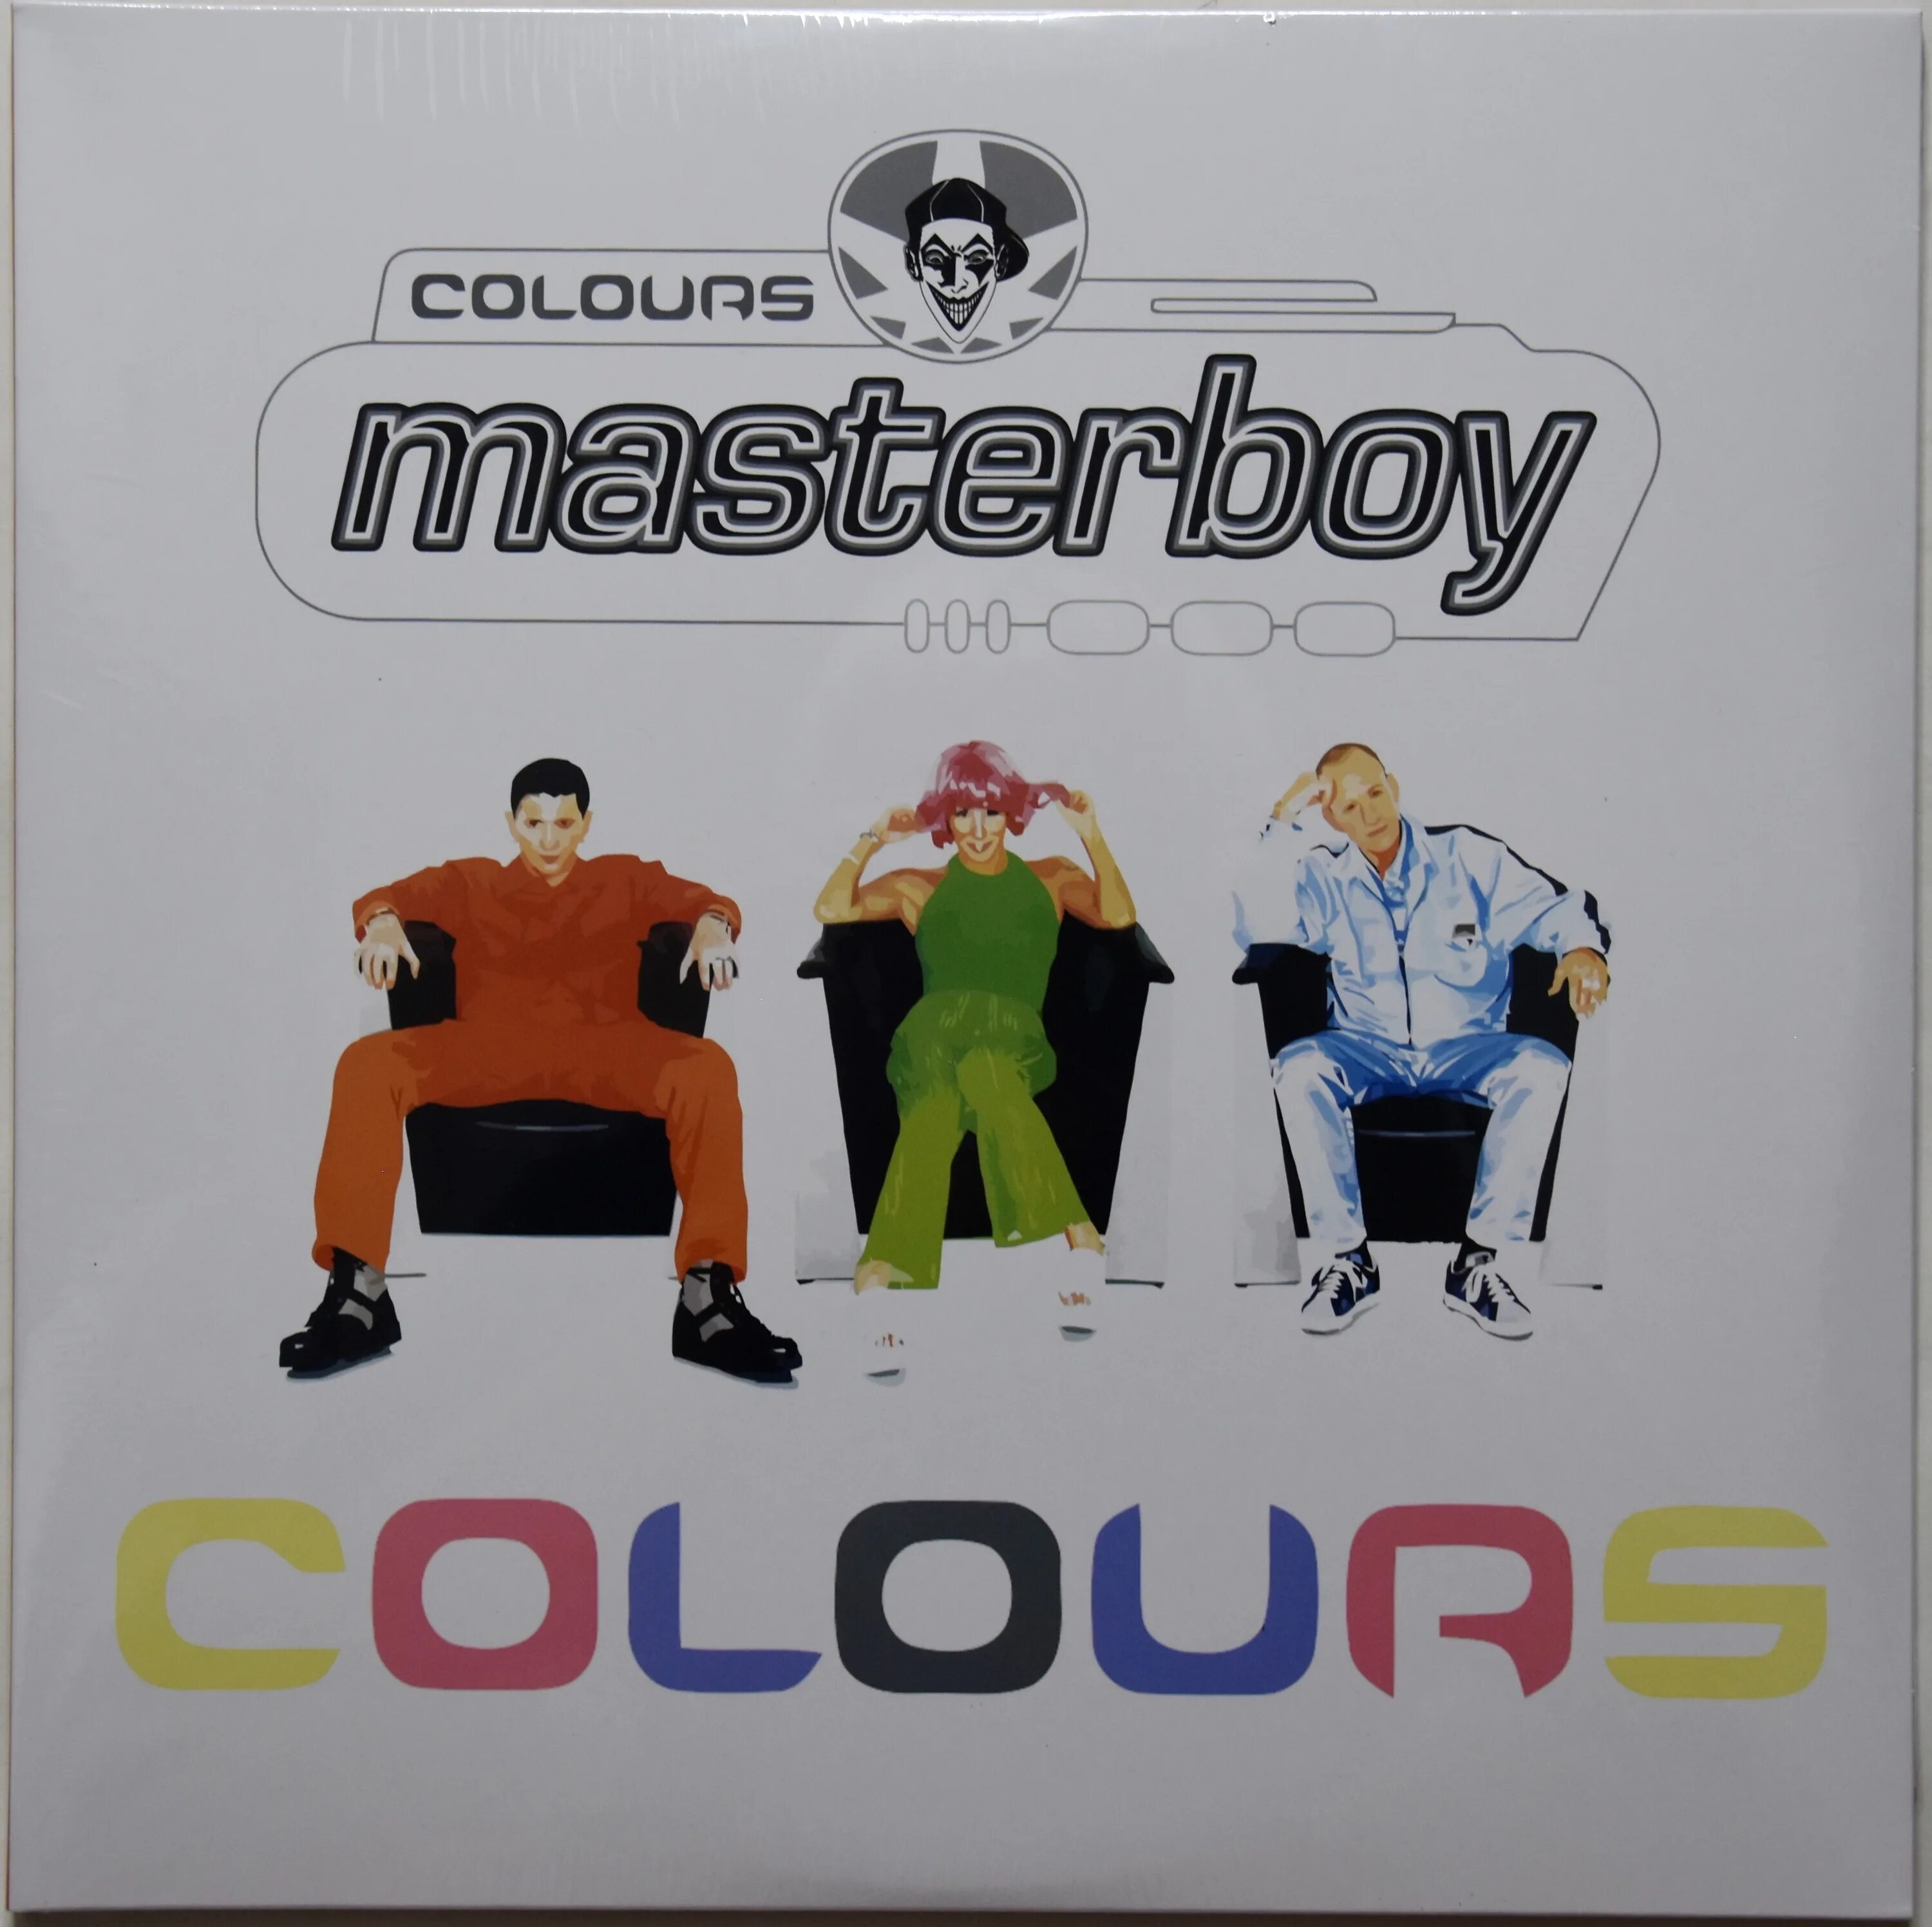 Mister feeling. Masterboy Colours. Masterboy фото группы. Masterboy логотип. Colour 1996.